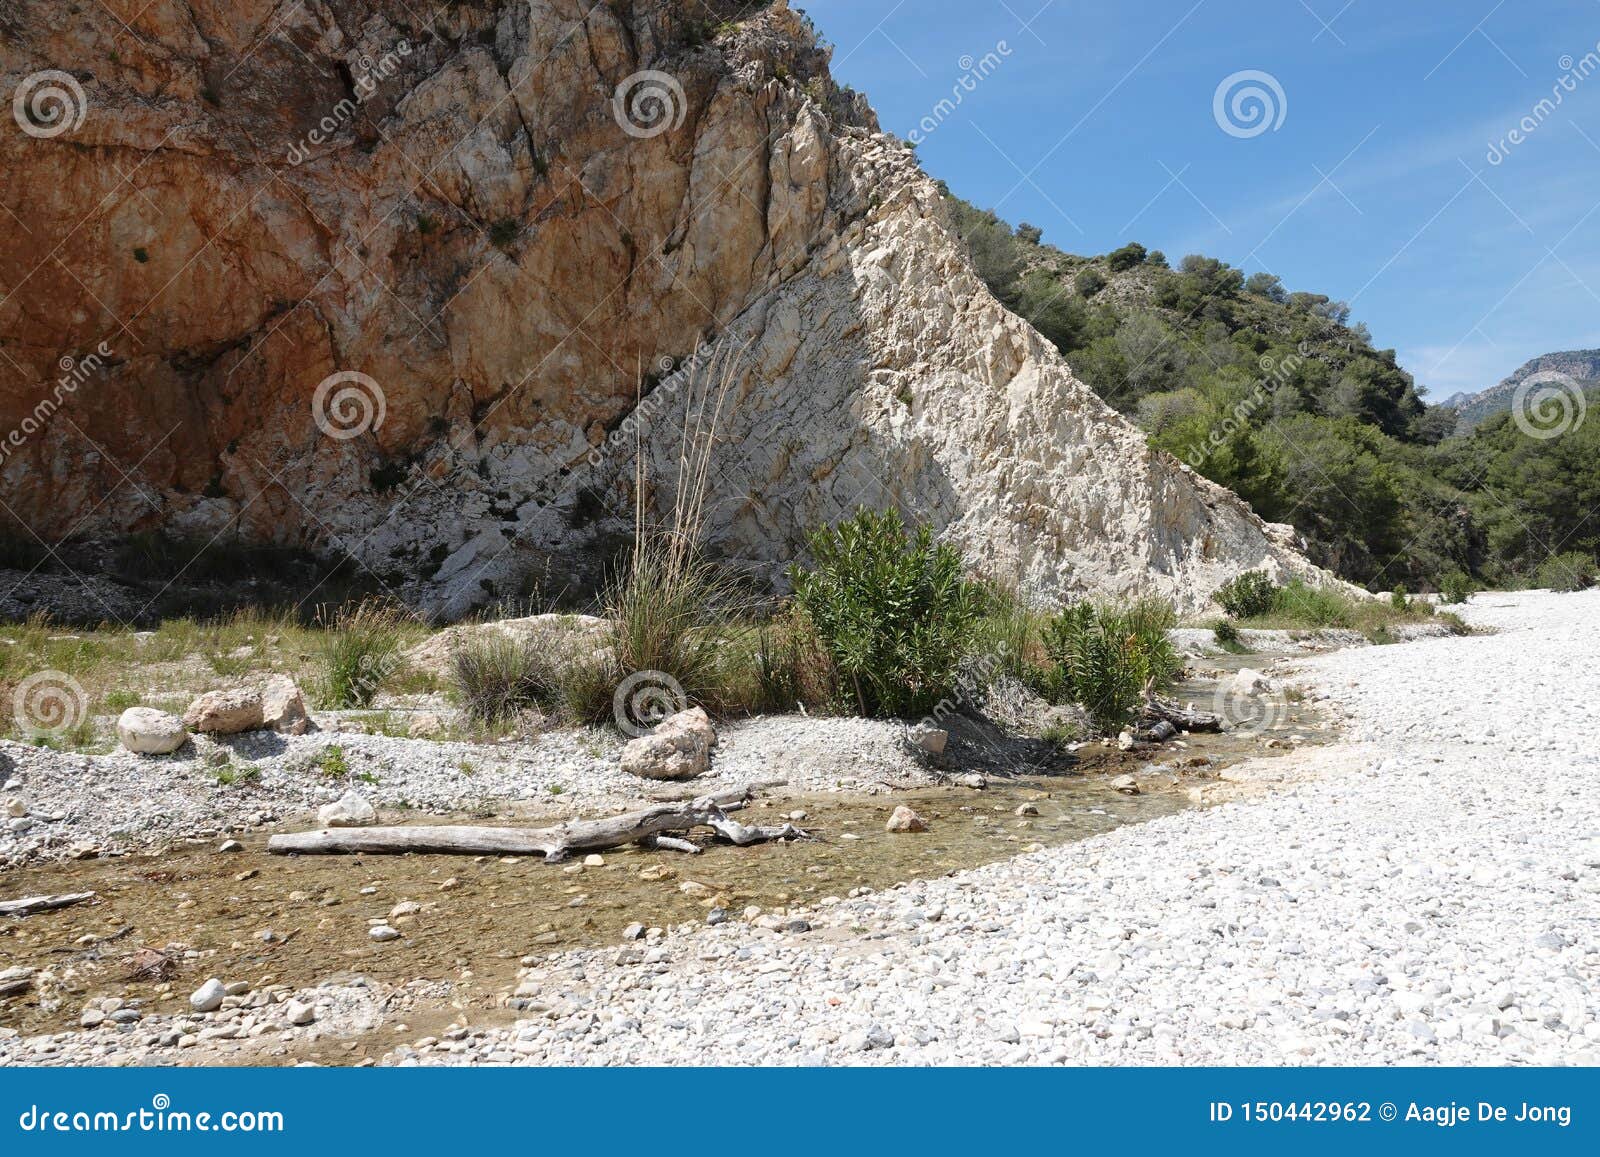 rio chillar river bed in nerja in andalusia, spain